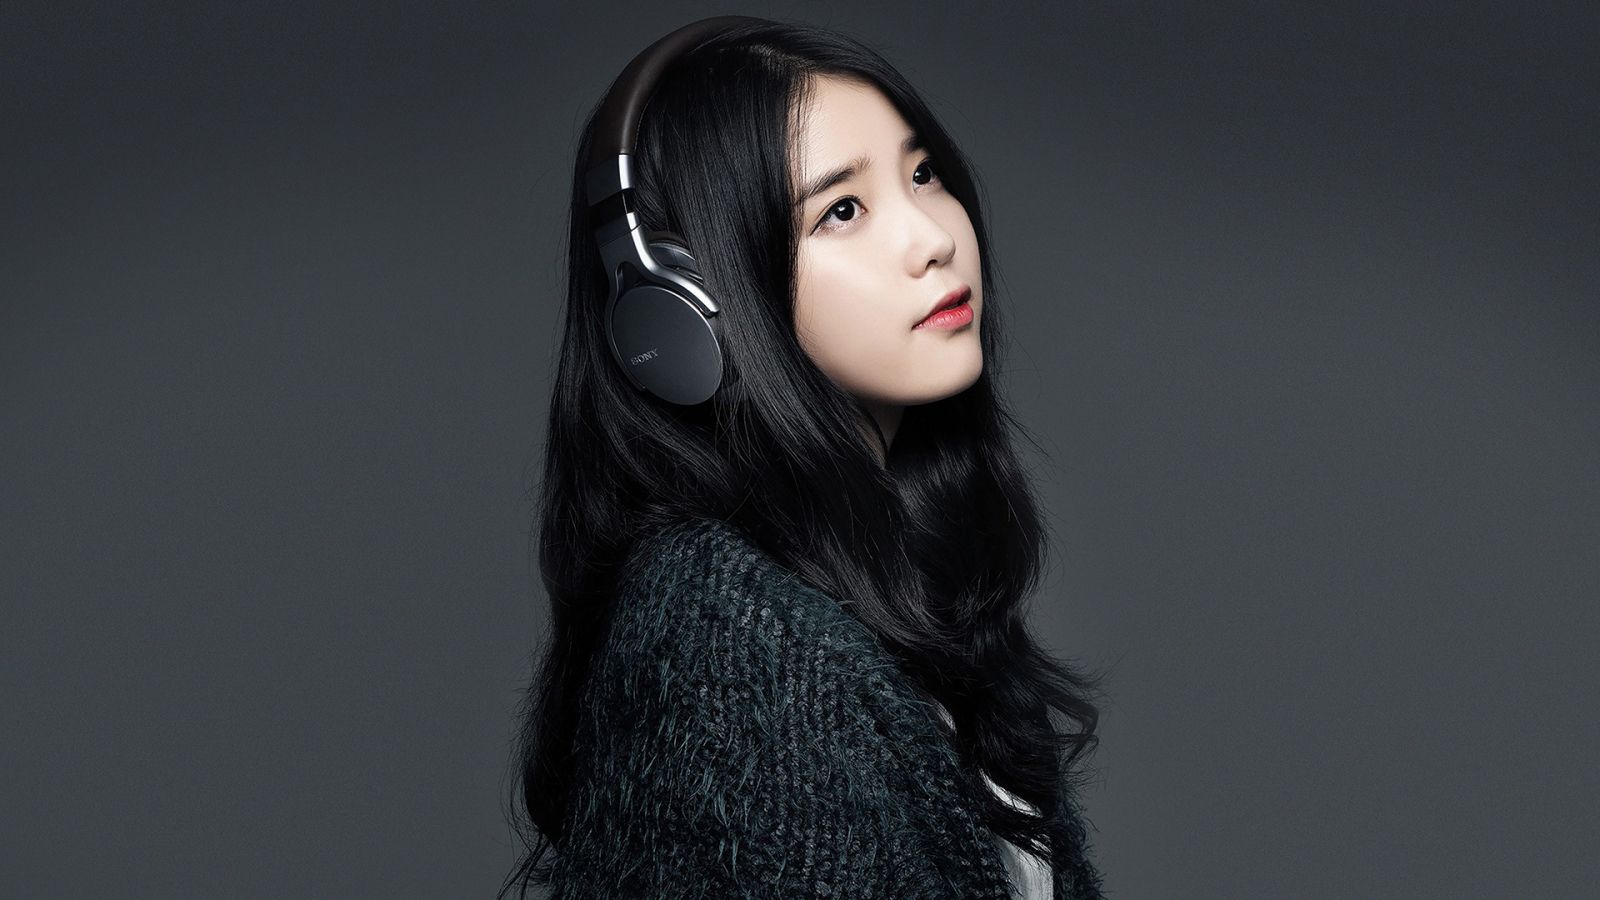 1600x900 Desktop Wallpaper Lee Ji Eun Iu South Korean K Pop Singer Hd Image Picture Background Yzyyhy